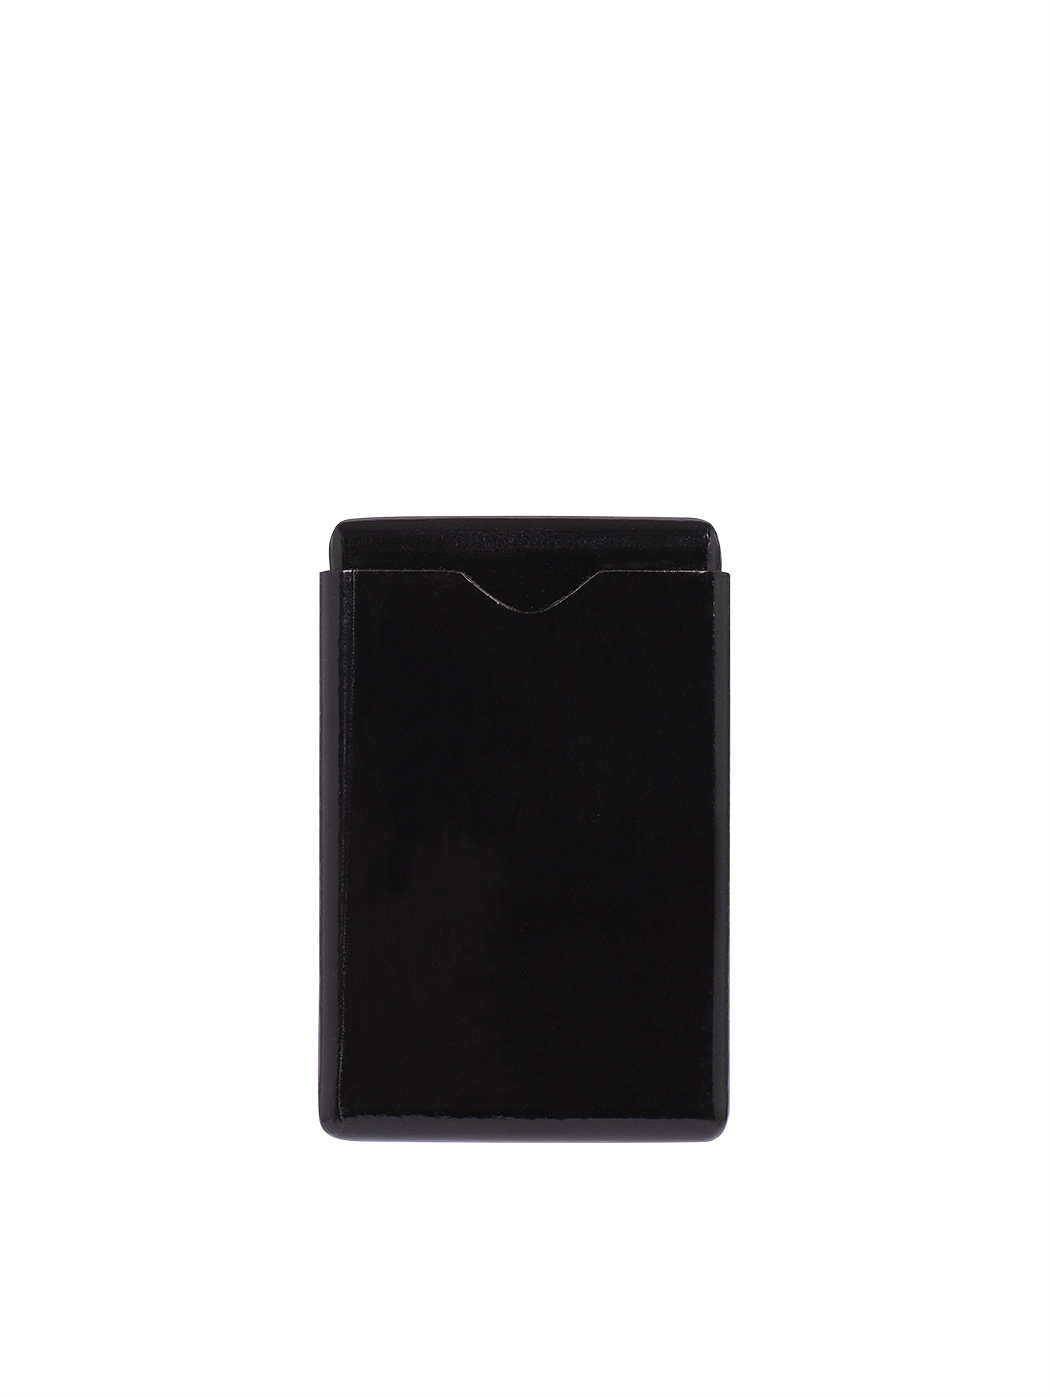 Business Card Holder Molded Leather Black